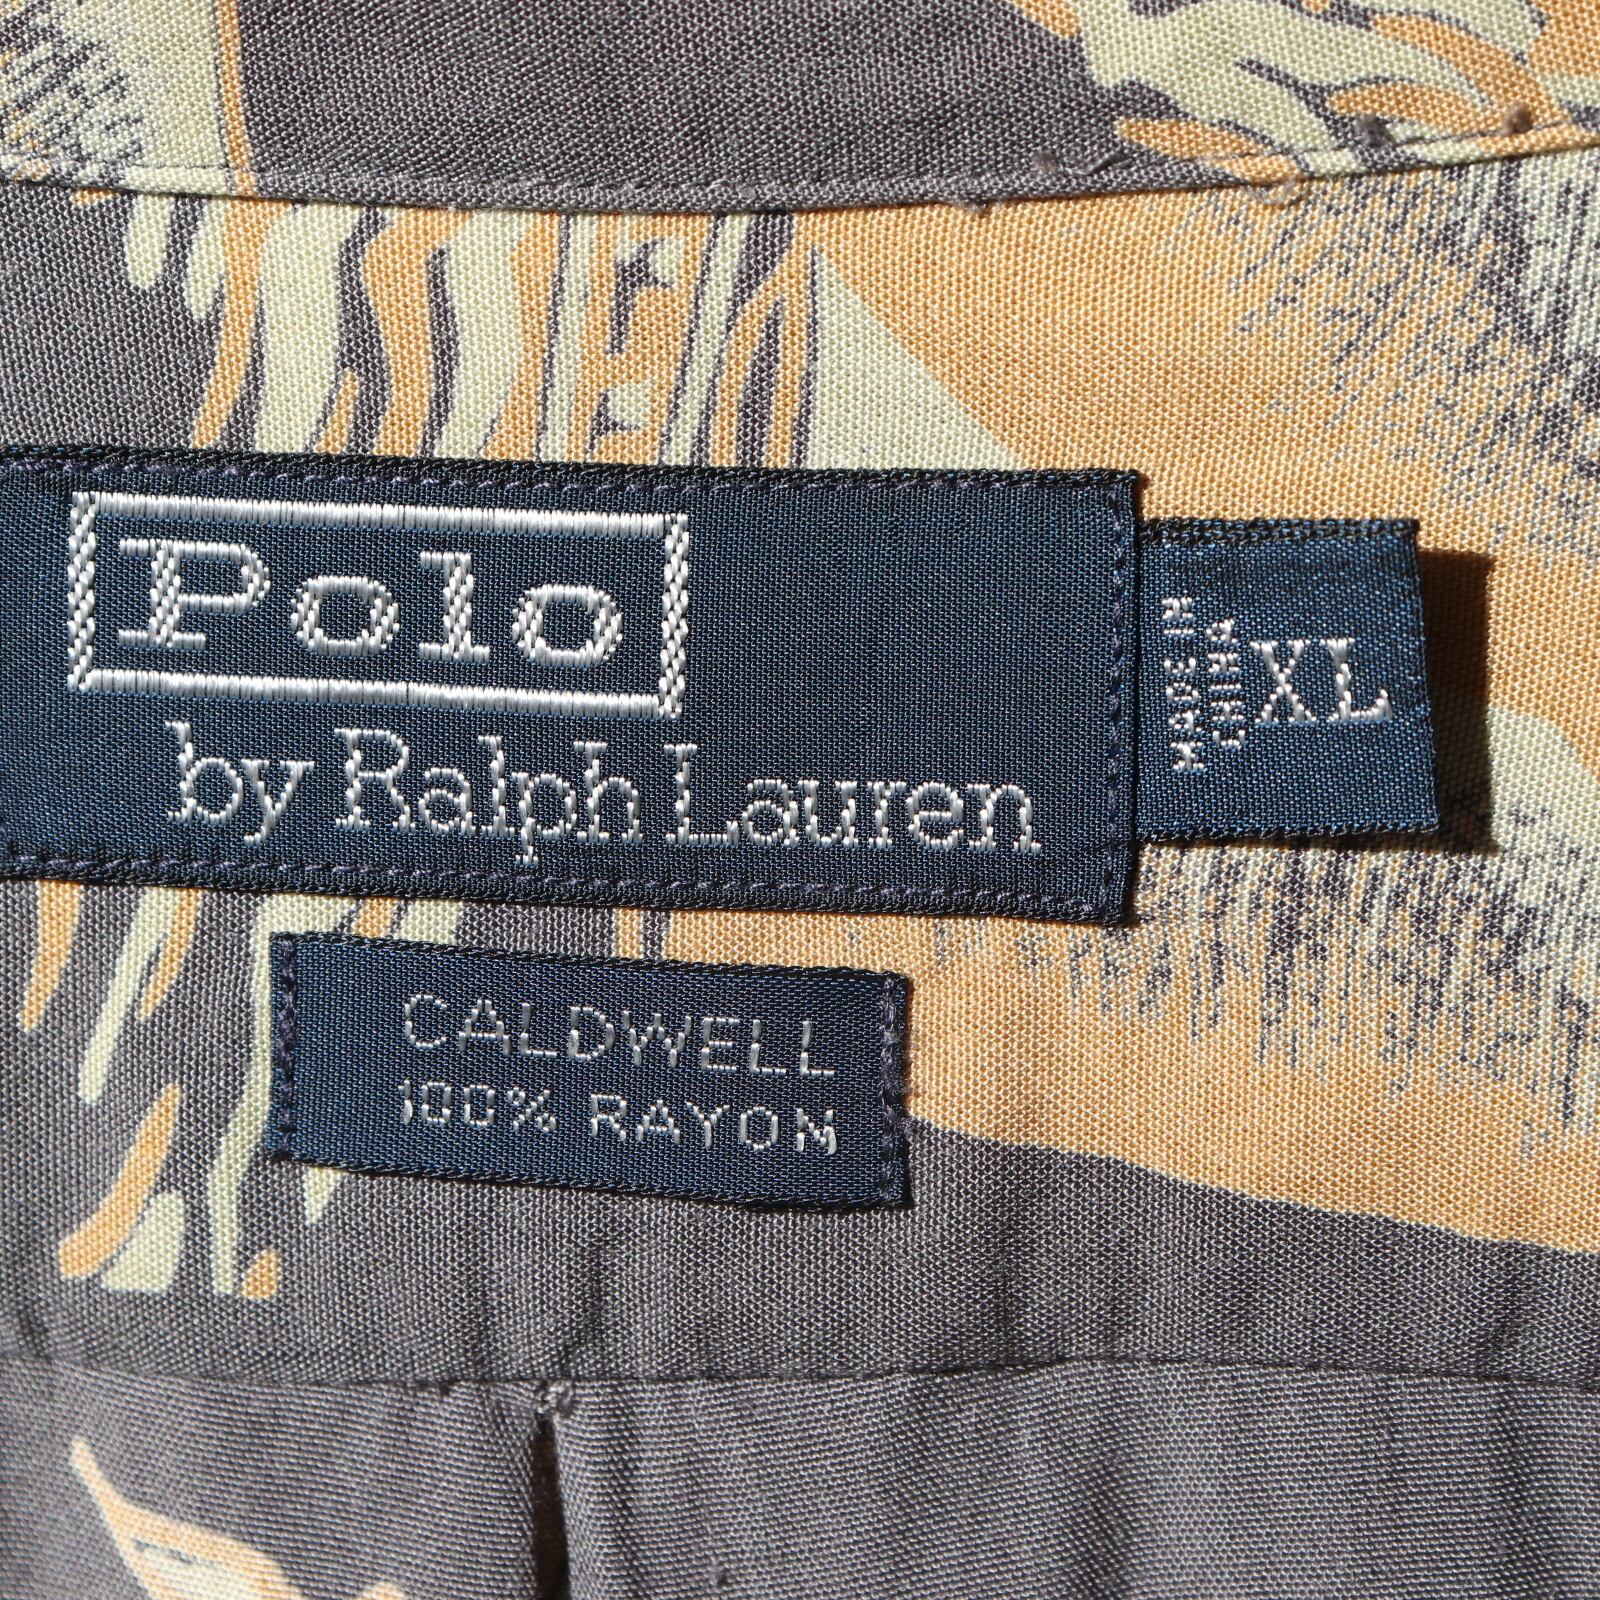 POLO RALPH LAULEN CALDWELL XL